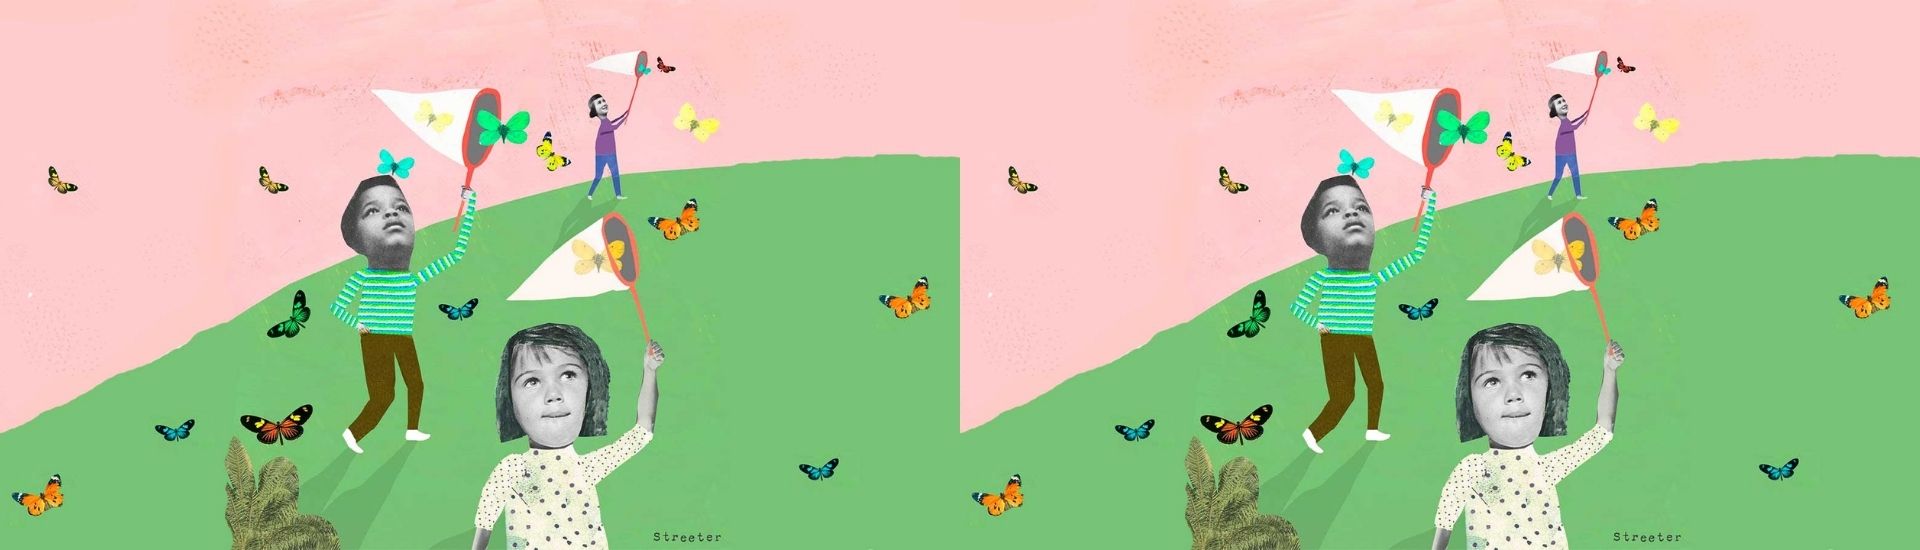 Ilustración de niños_as cazando mariposas